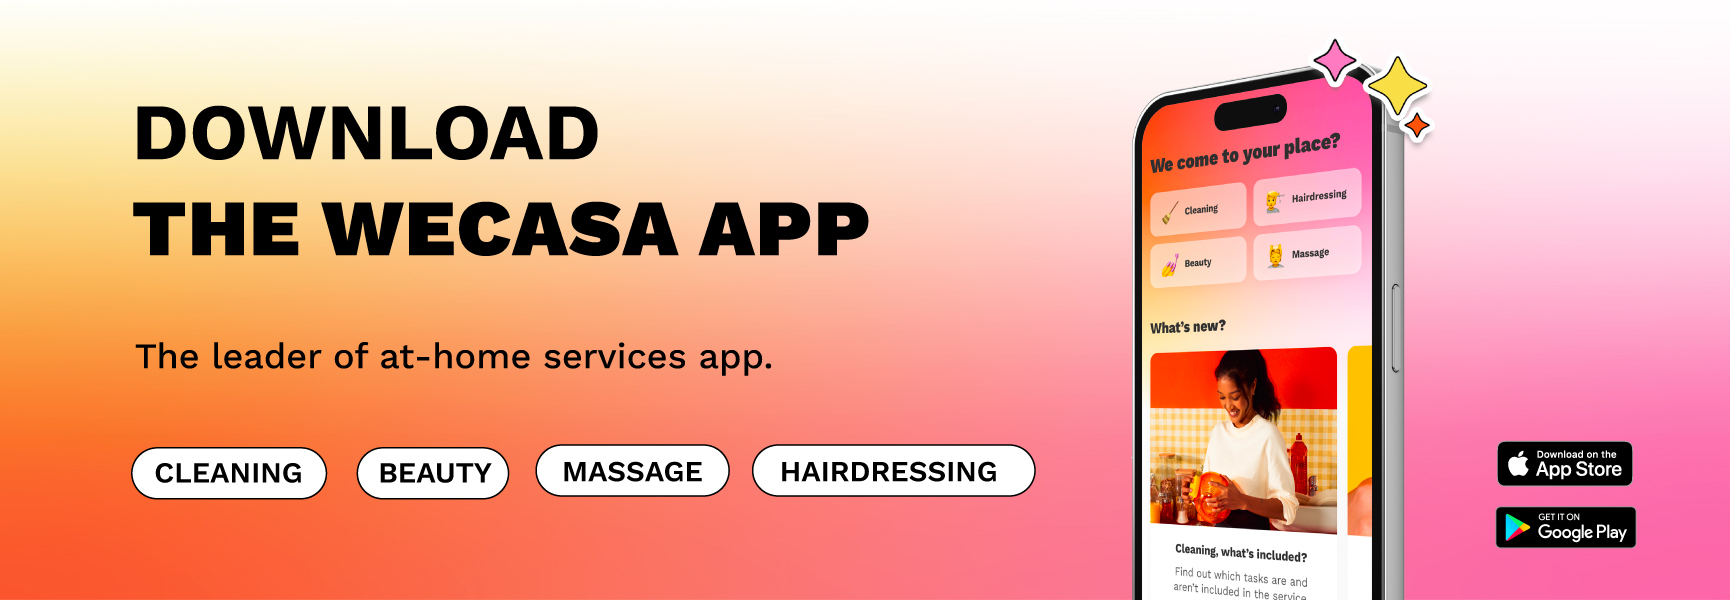 Download the Wecasa app